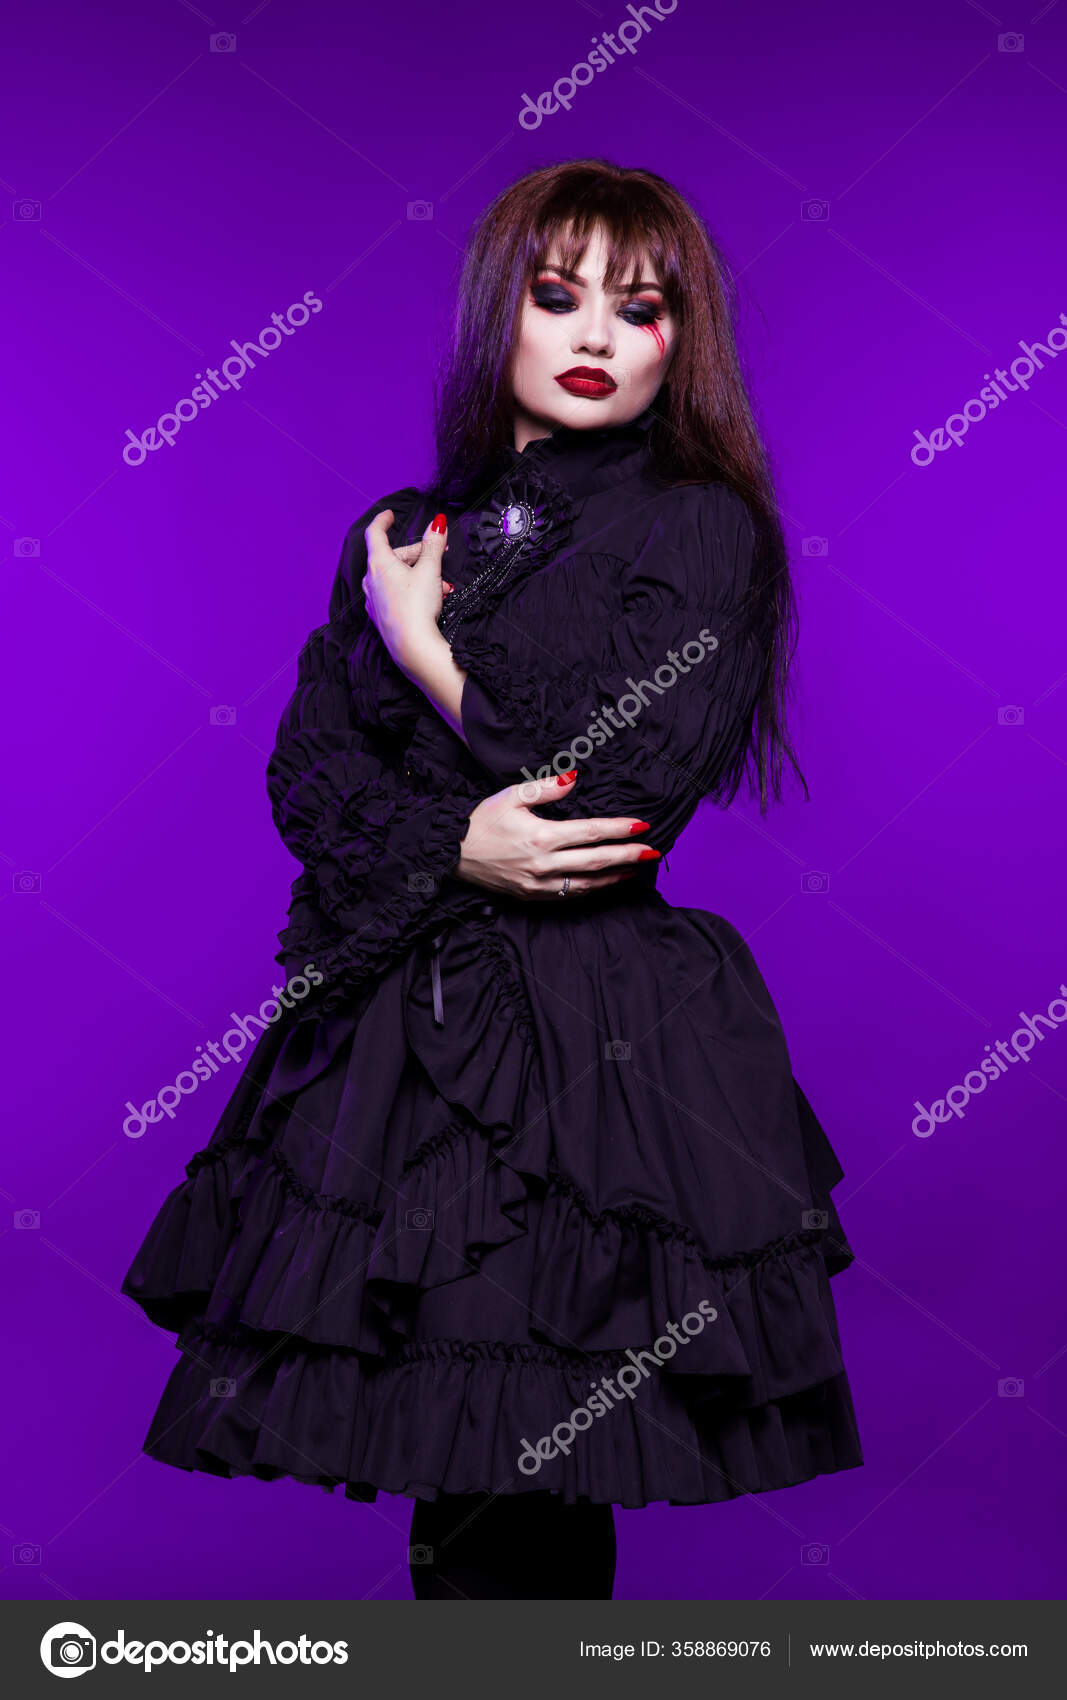 Women's Gothic Girl Costume | Oriental Trading